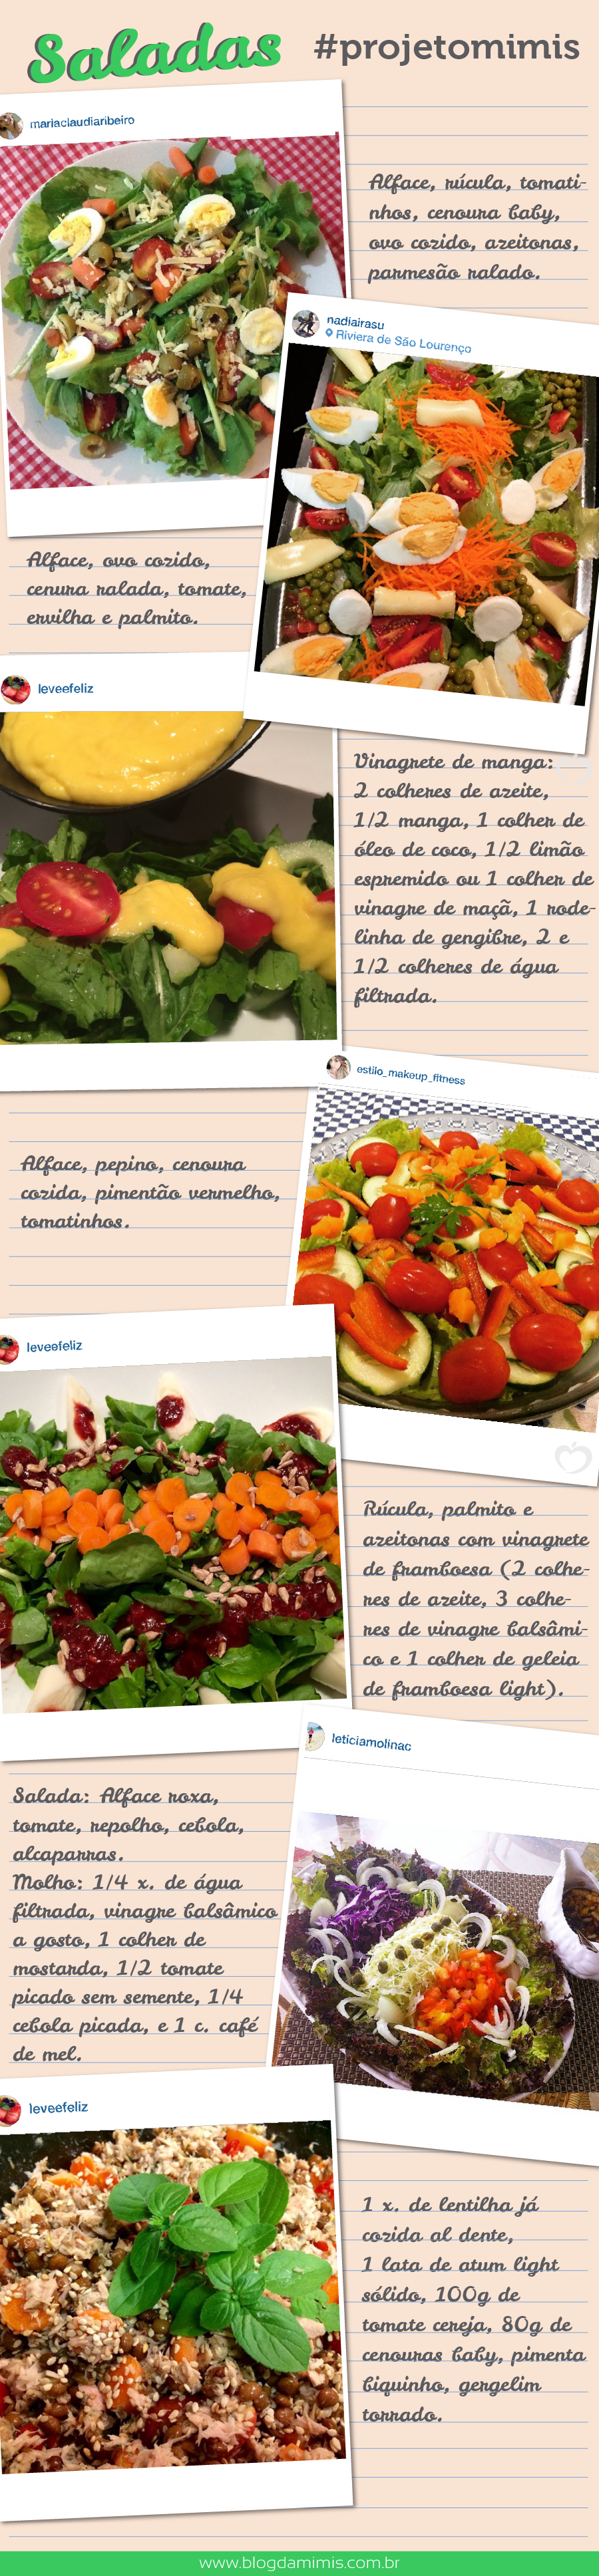 saladas-praticas-blog-da-mimis-michelle-franzoni-01